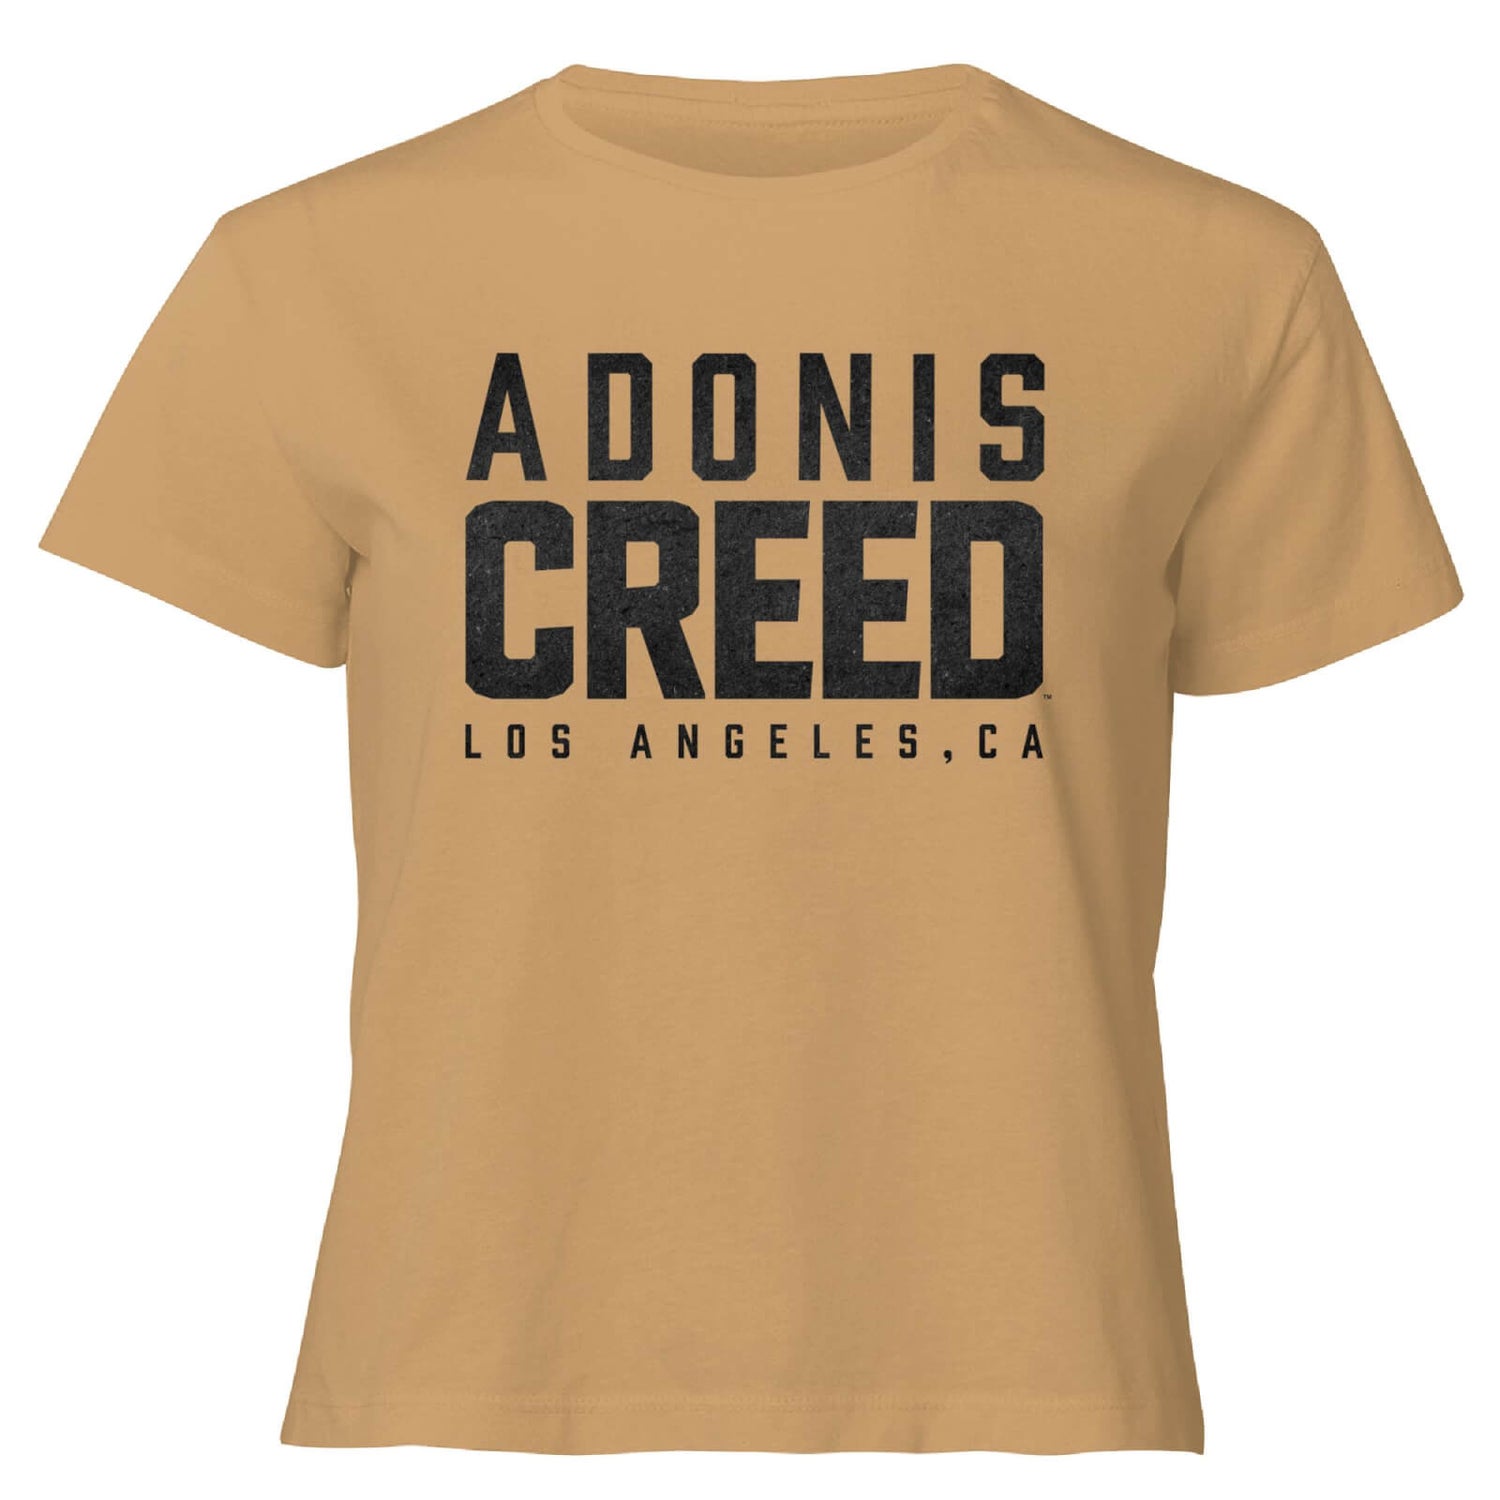 Creed Adonis Creed LA Logo Women's Cropped T-Shirt - Tan